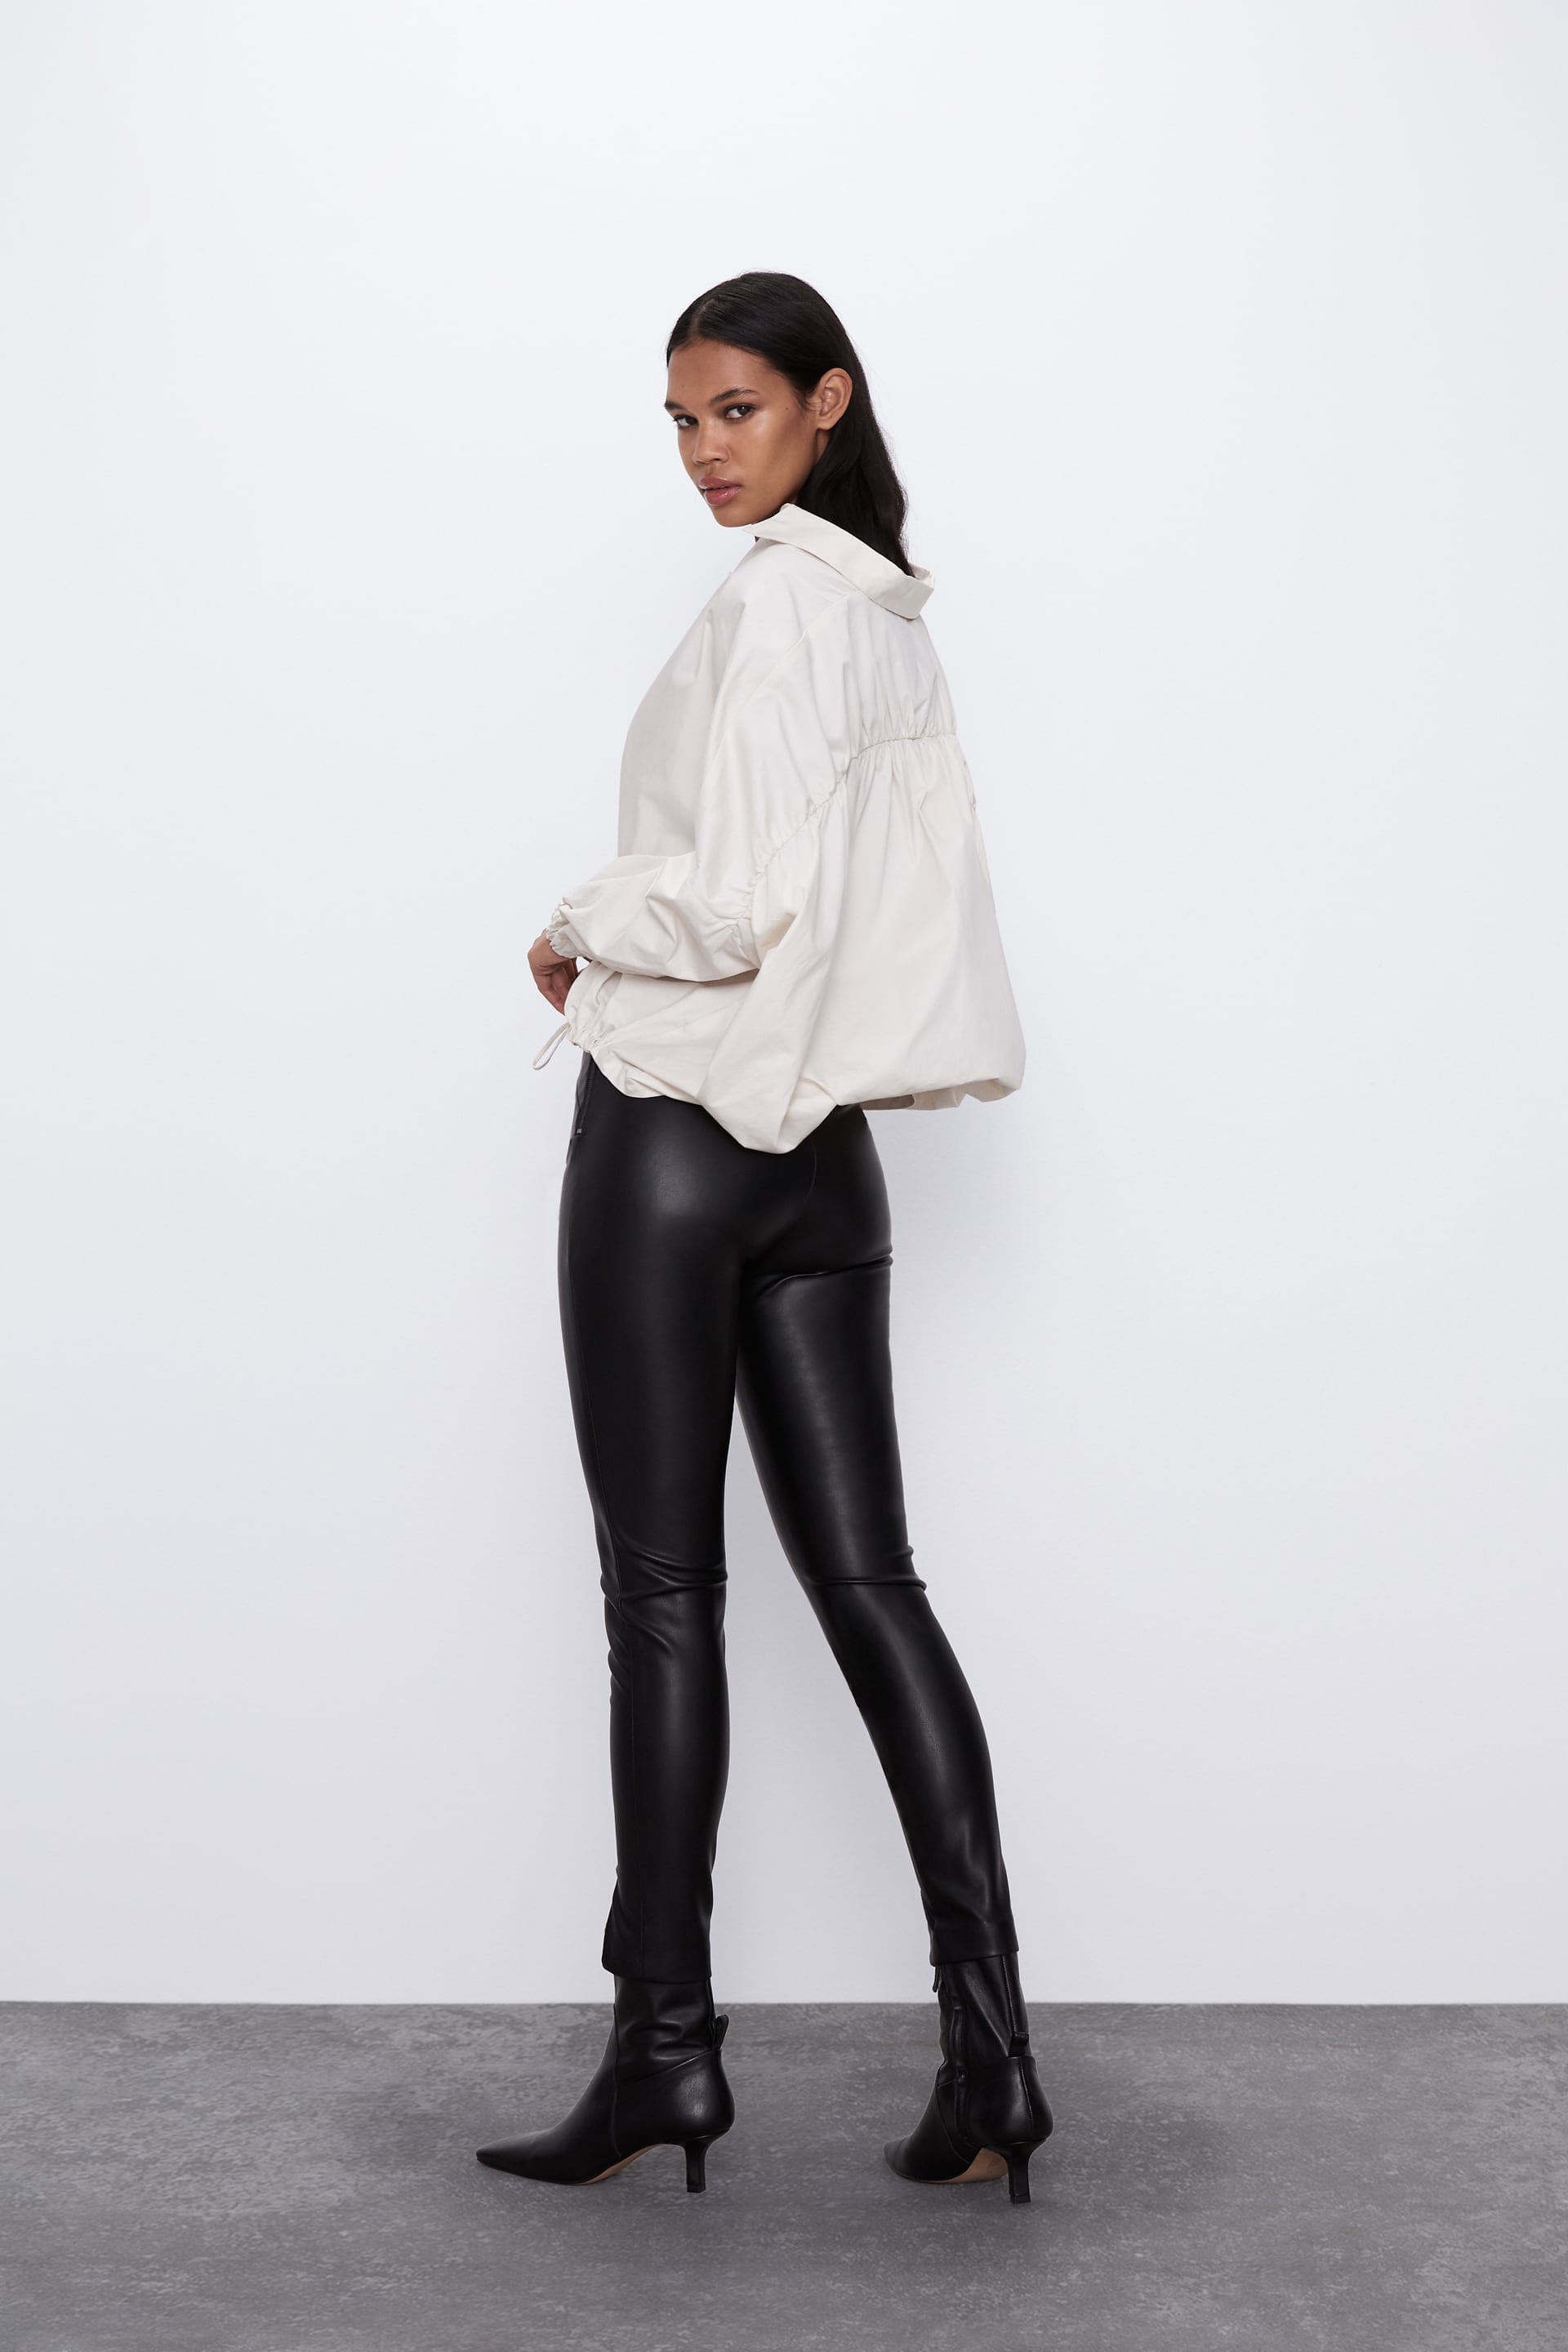 H&M Faux Leather Pants  Jennifer Aniston Has an Idea: Leather